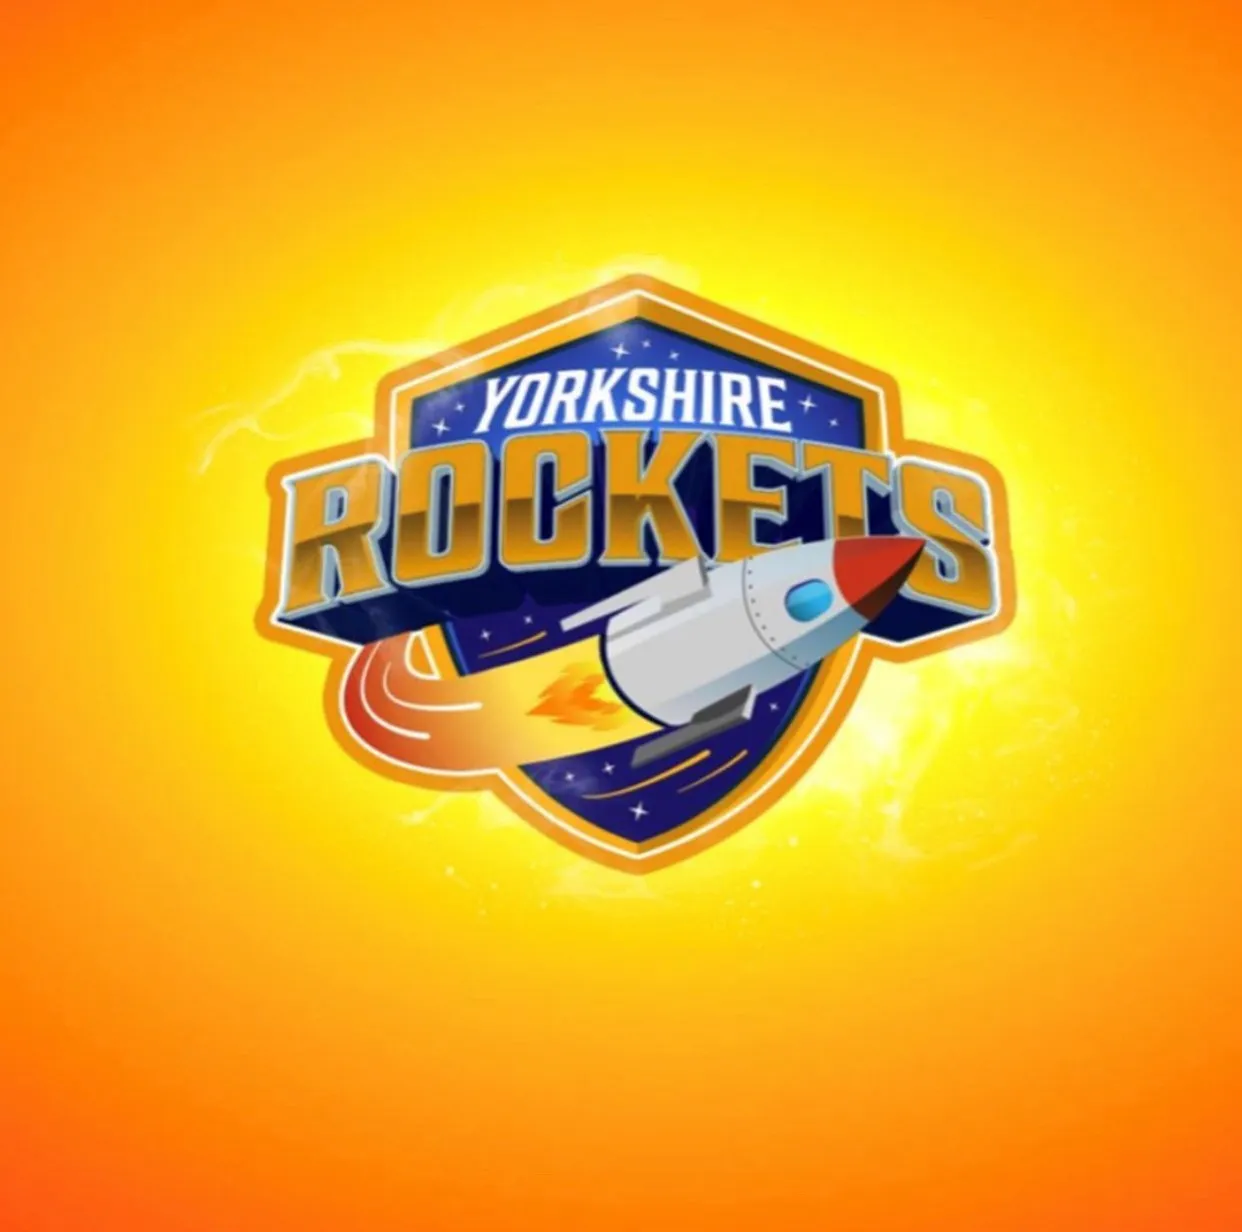 Yorkshire Rockets logo